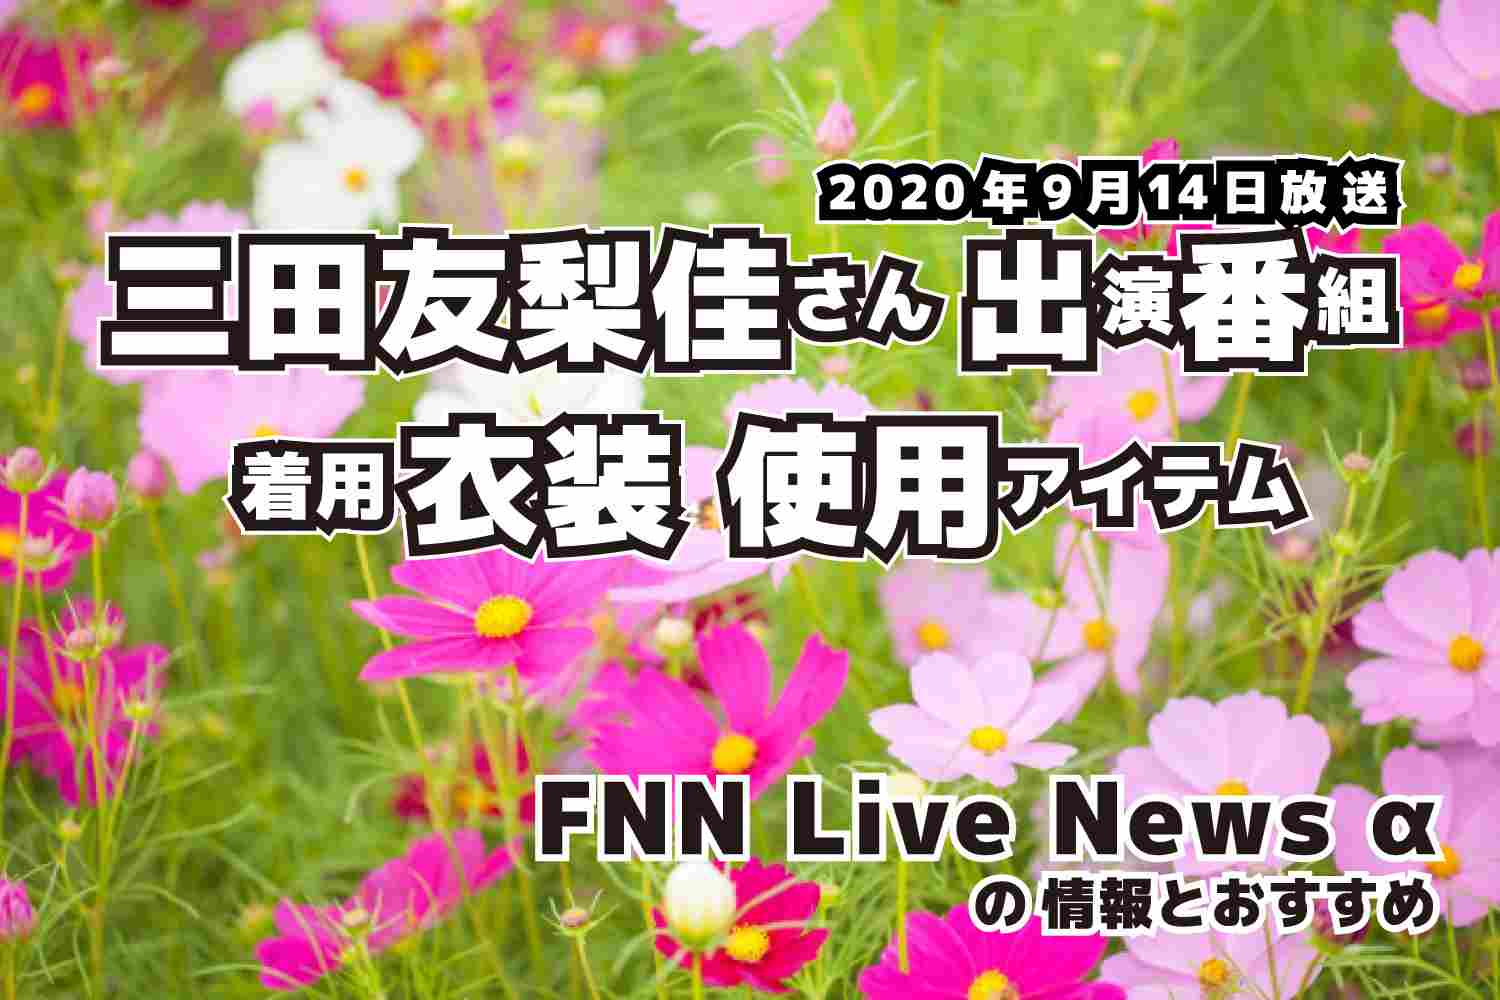 FNN Live News α　三田友梨佳さん 　衣装　2020年9月14日放送